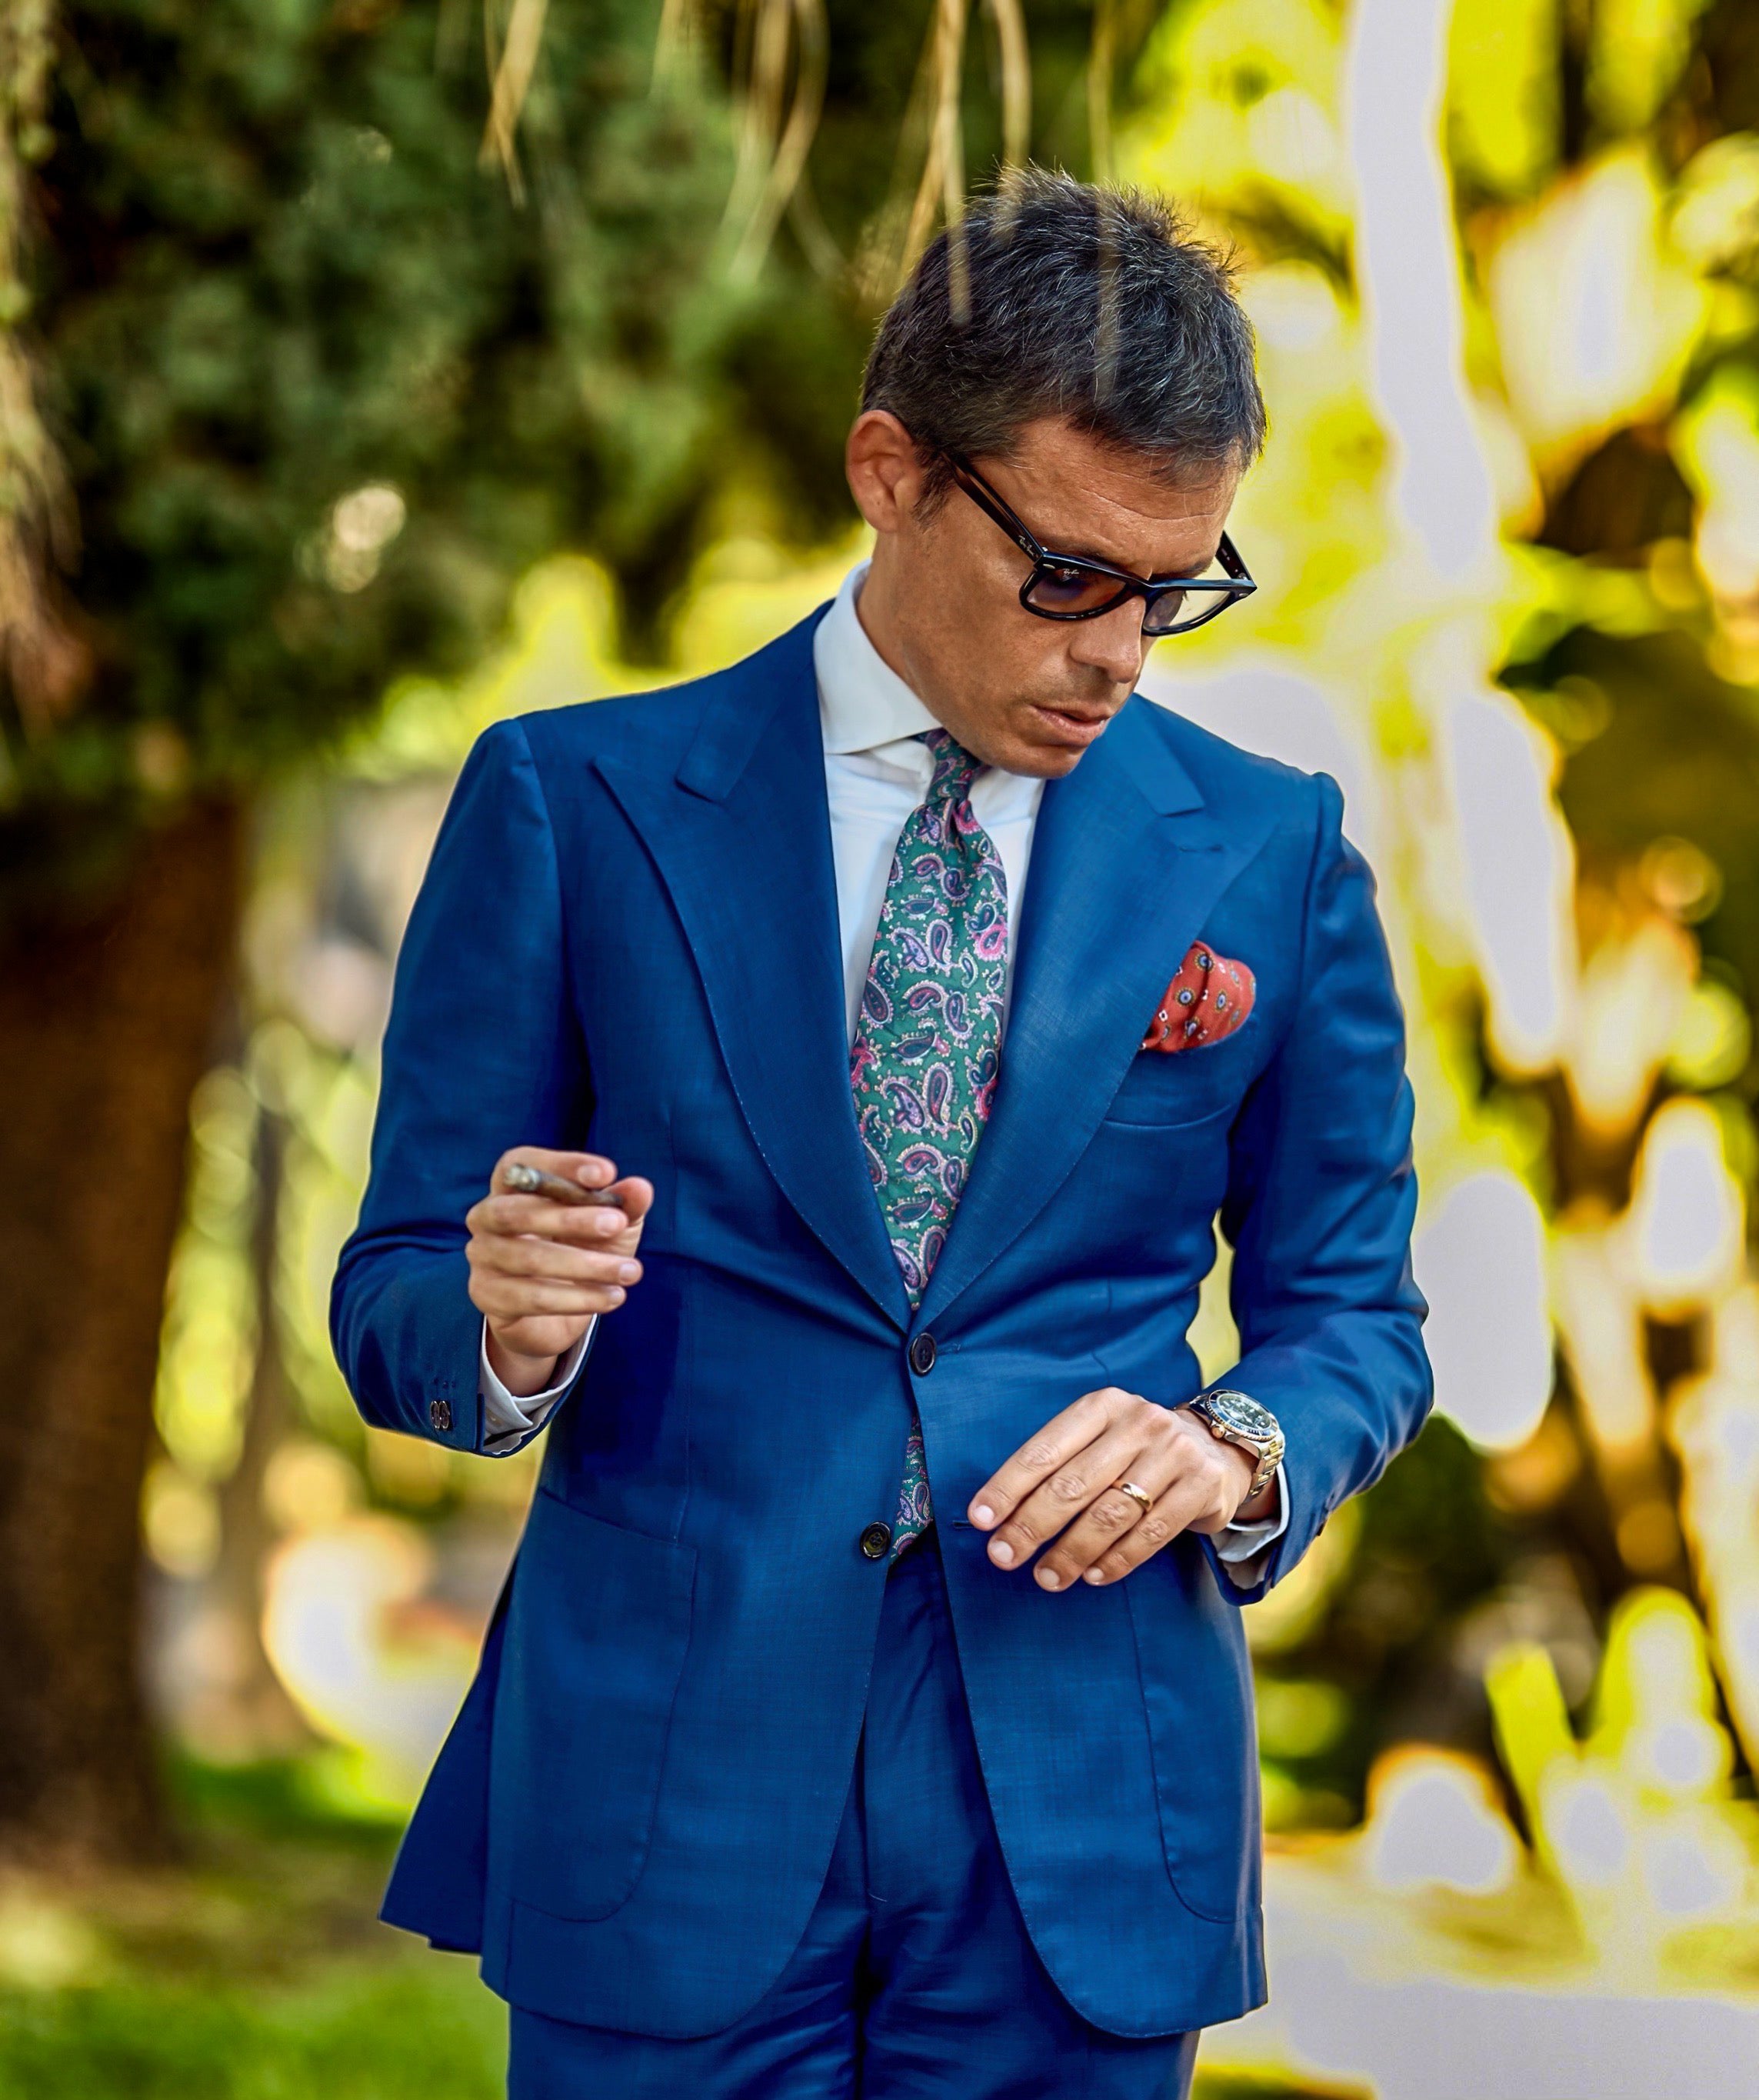 Hunter Green Isfahan Paisley Necktie | Vintage Ties for Men Australia ...